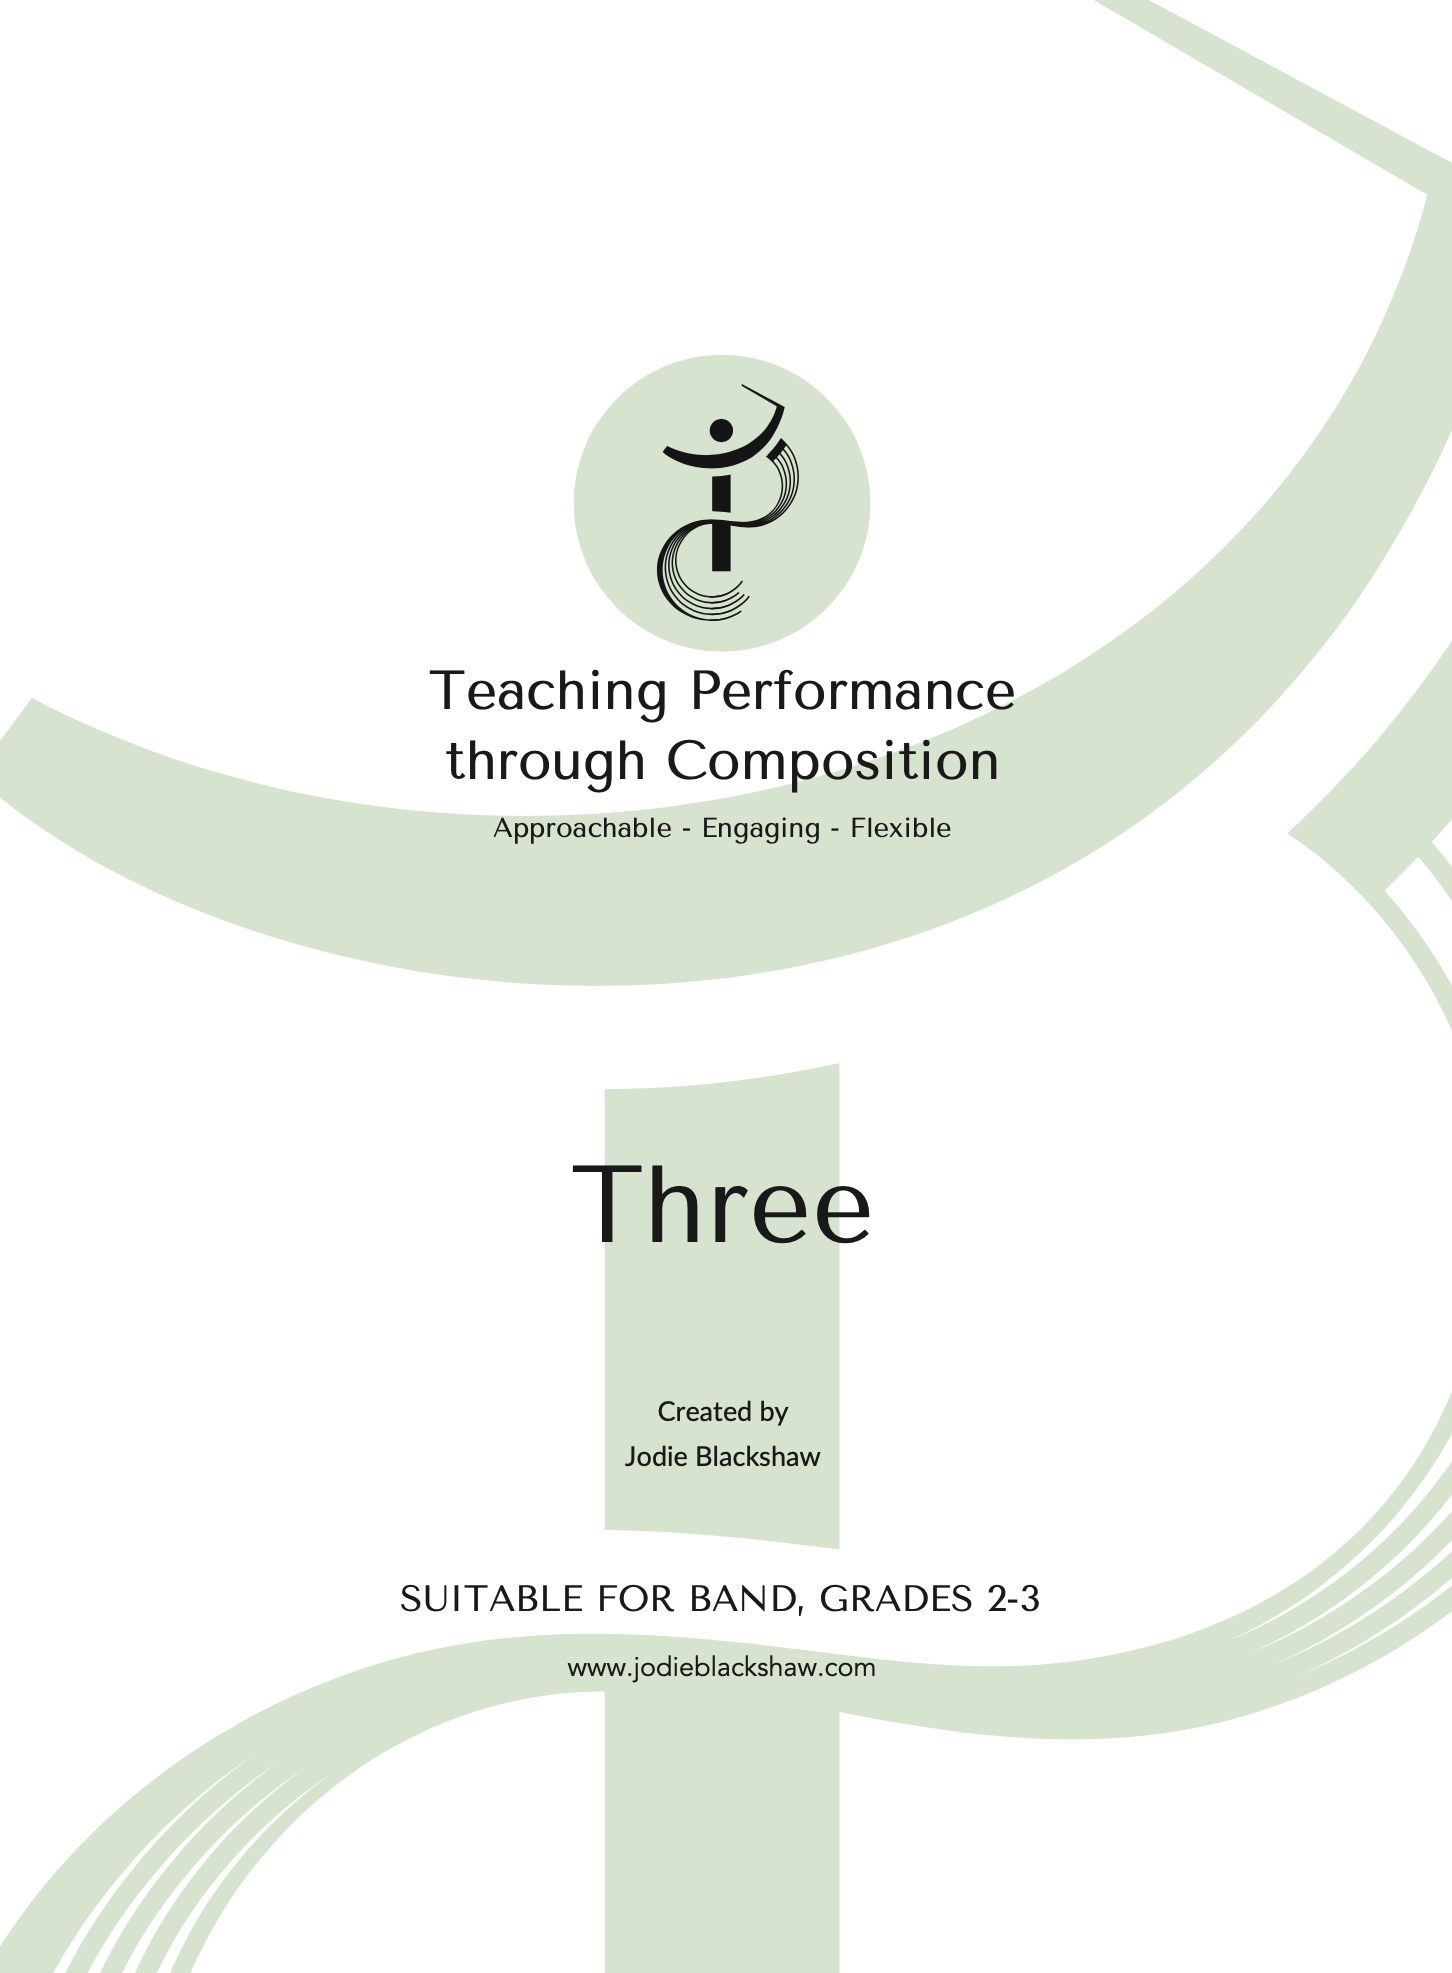 Teaching Performance Through Composition, Volume Three by Jodie Blackshaw